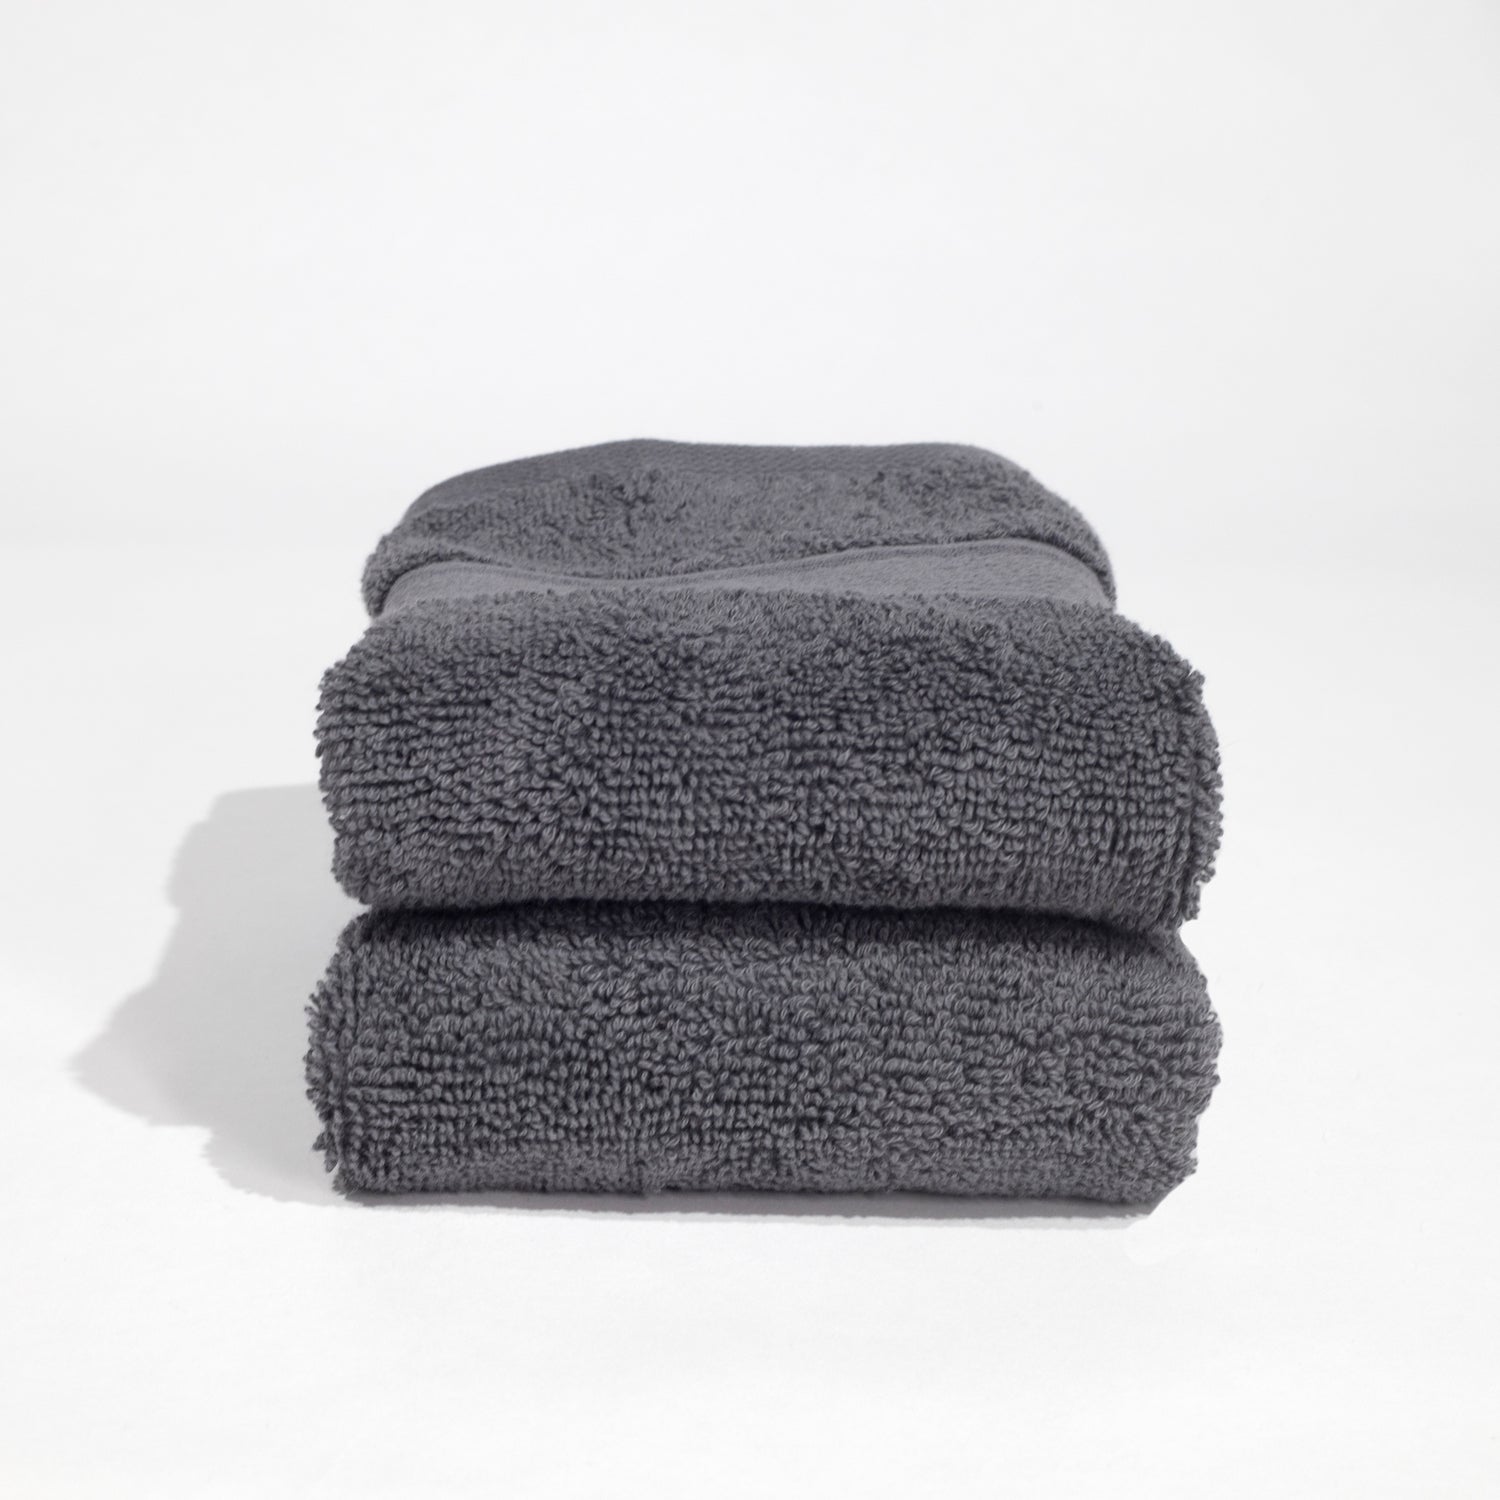 Pinehurst Face Towels (Pair)